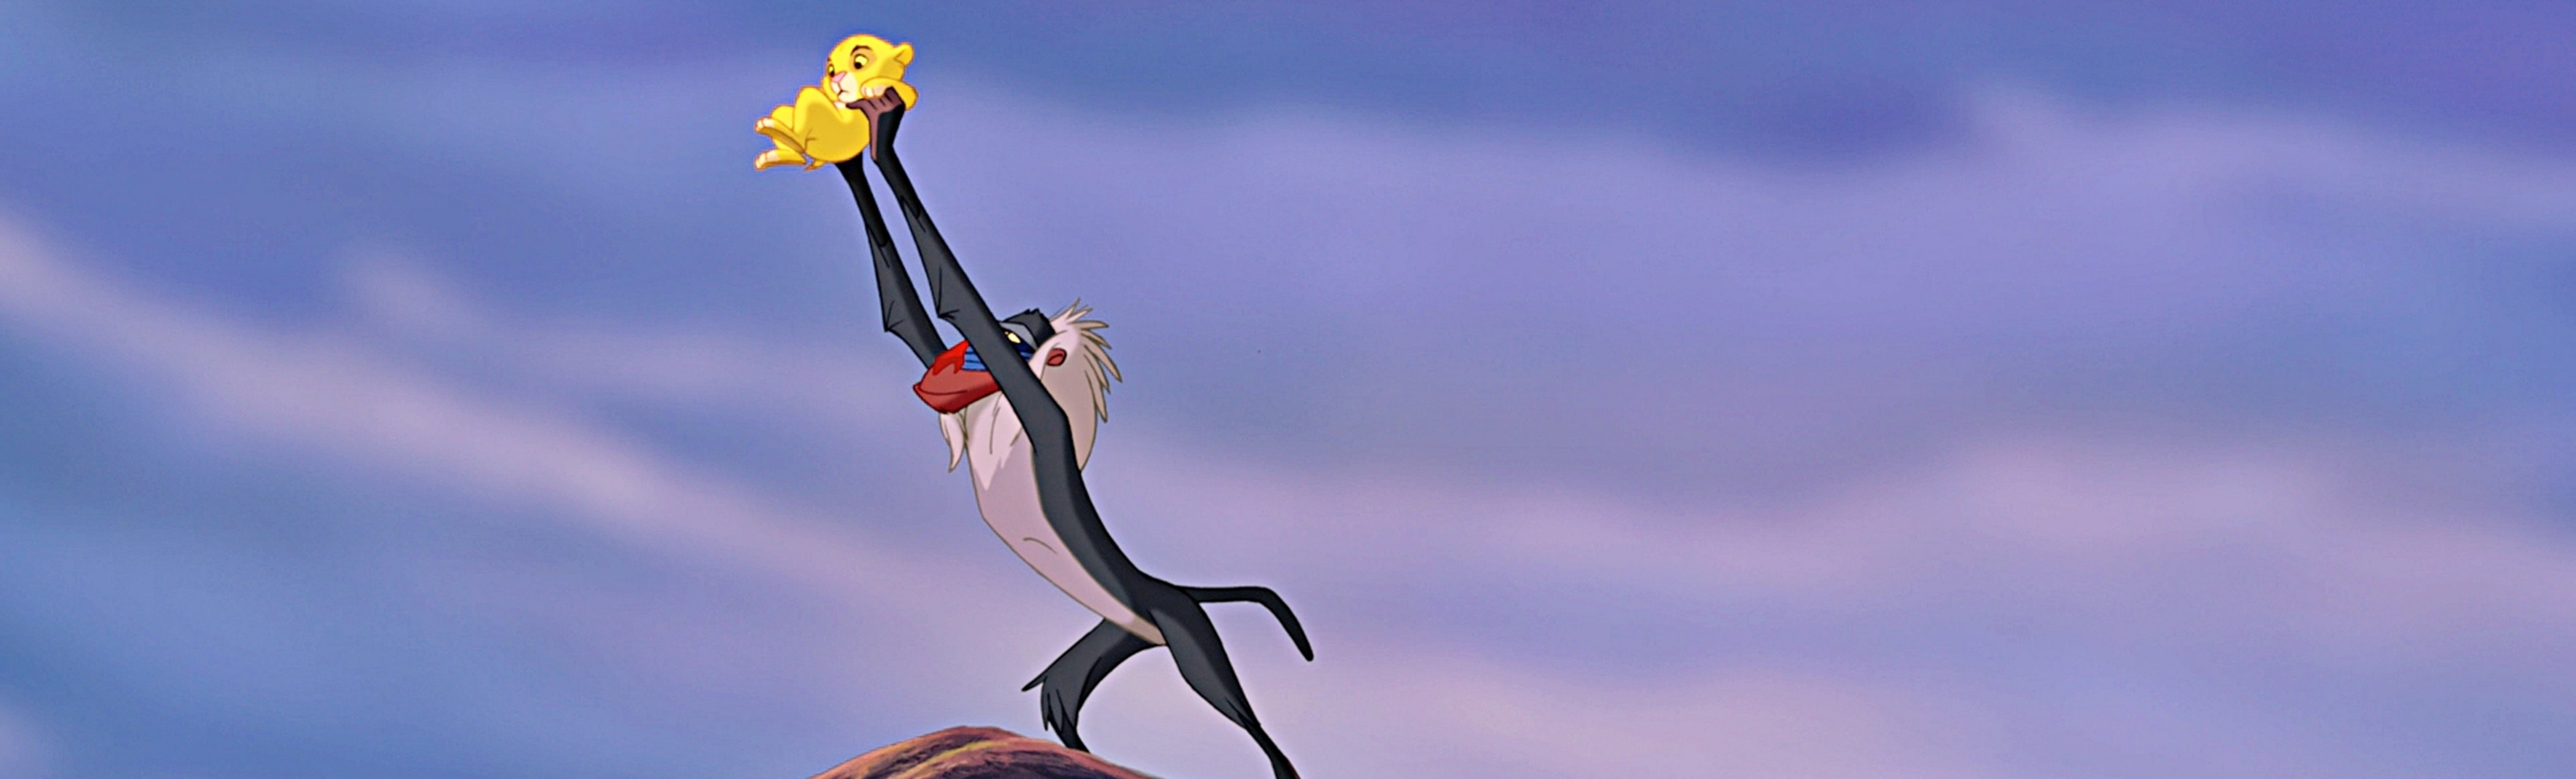 Walt-Disney-Screencaps-Simba-Rafiki-walt-disney-characters-32474015-5000-2813